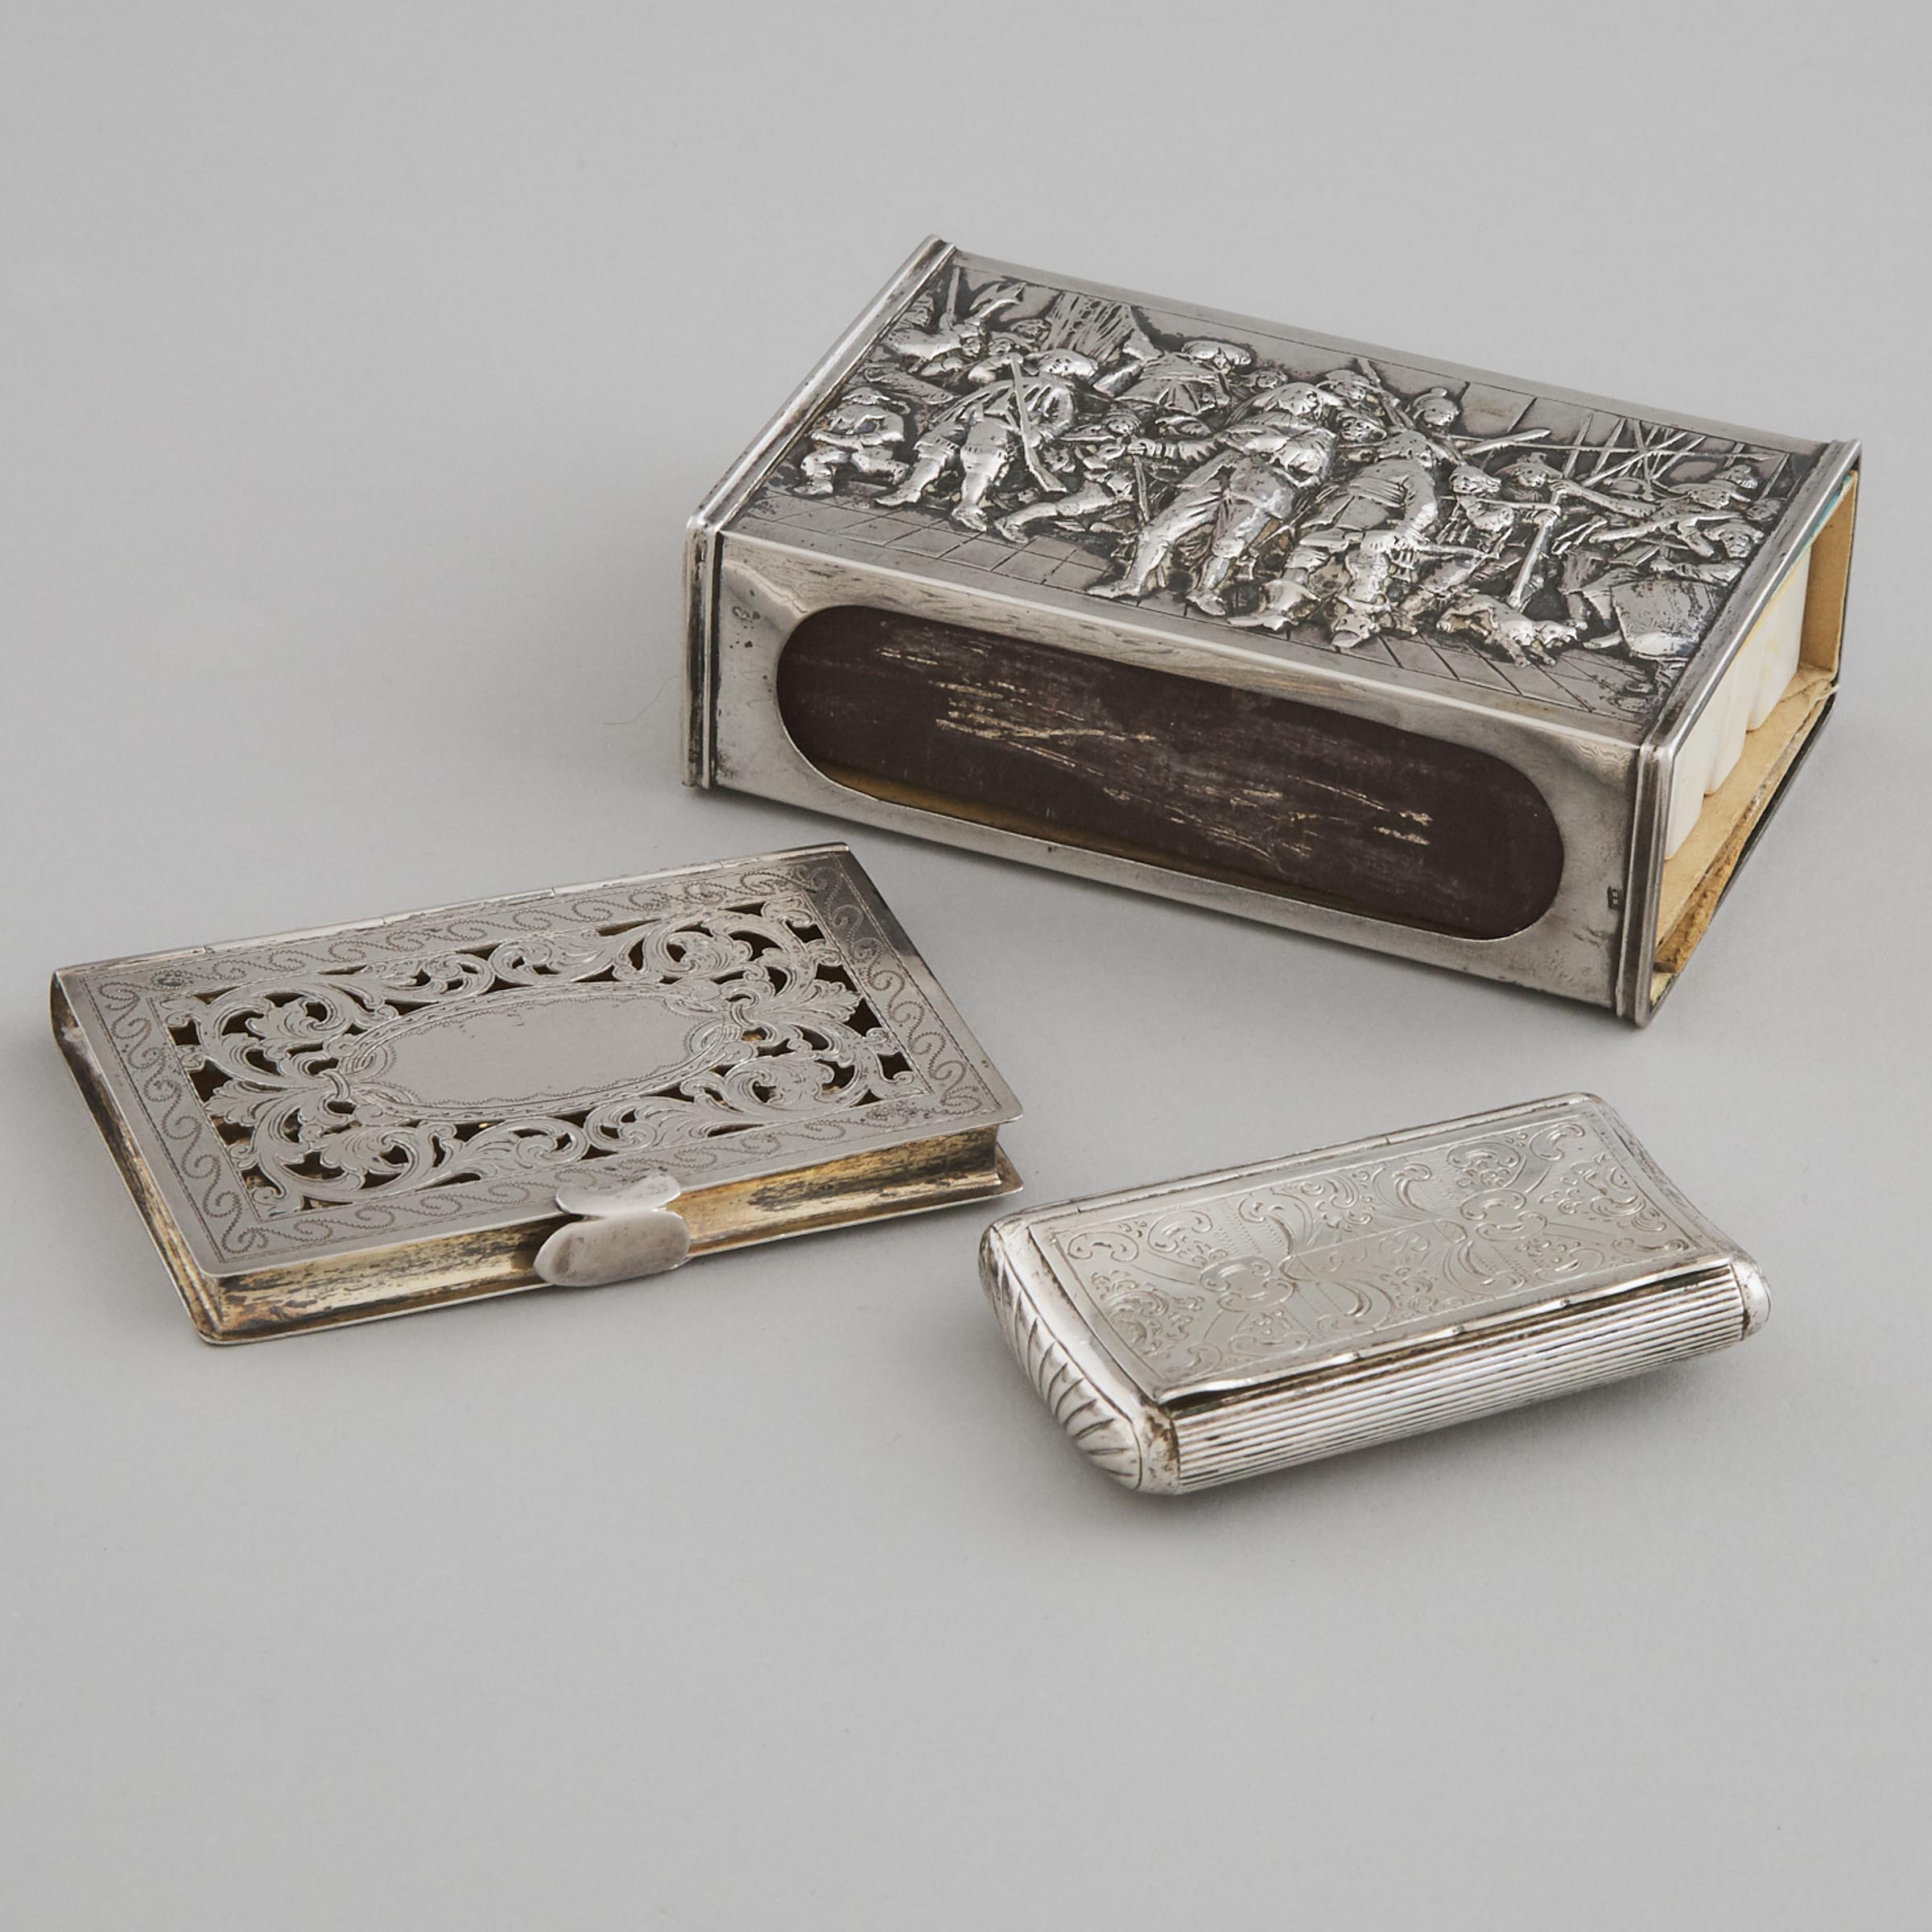 Dutch Silver Matchbox Cover, Pierced Book-Form Card Case and a Snuff Box, 19th/20th century